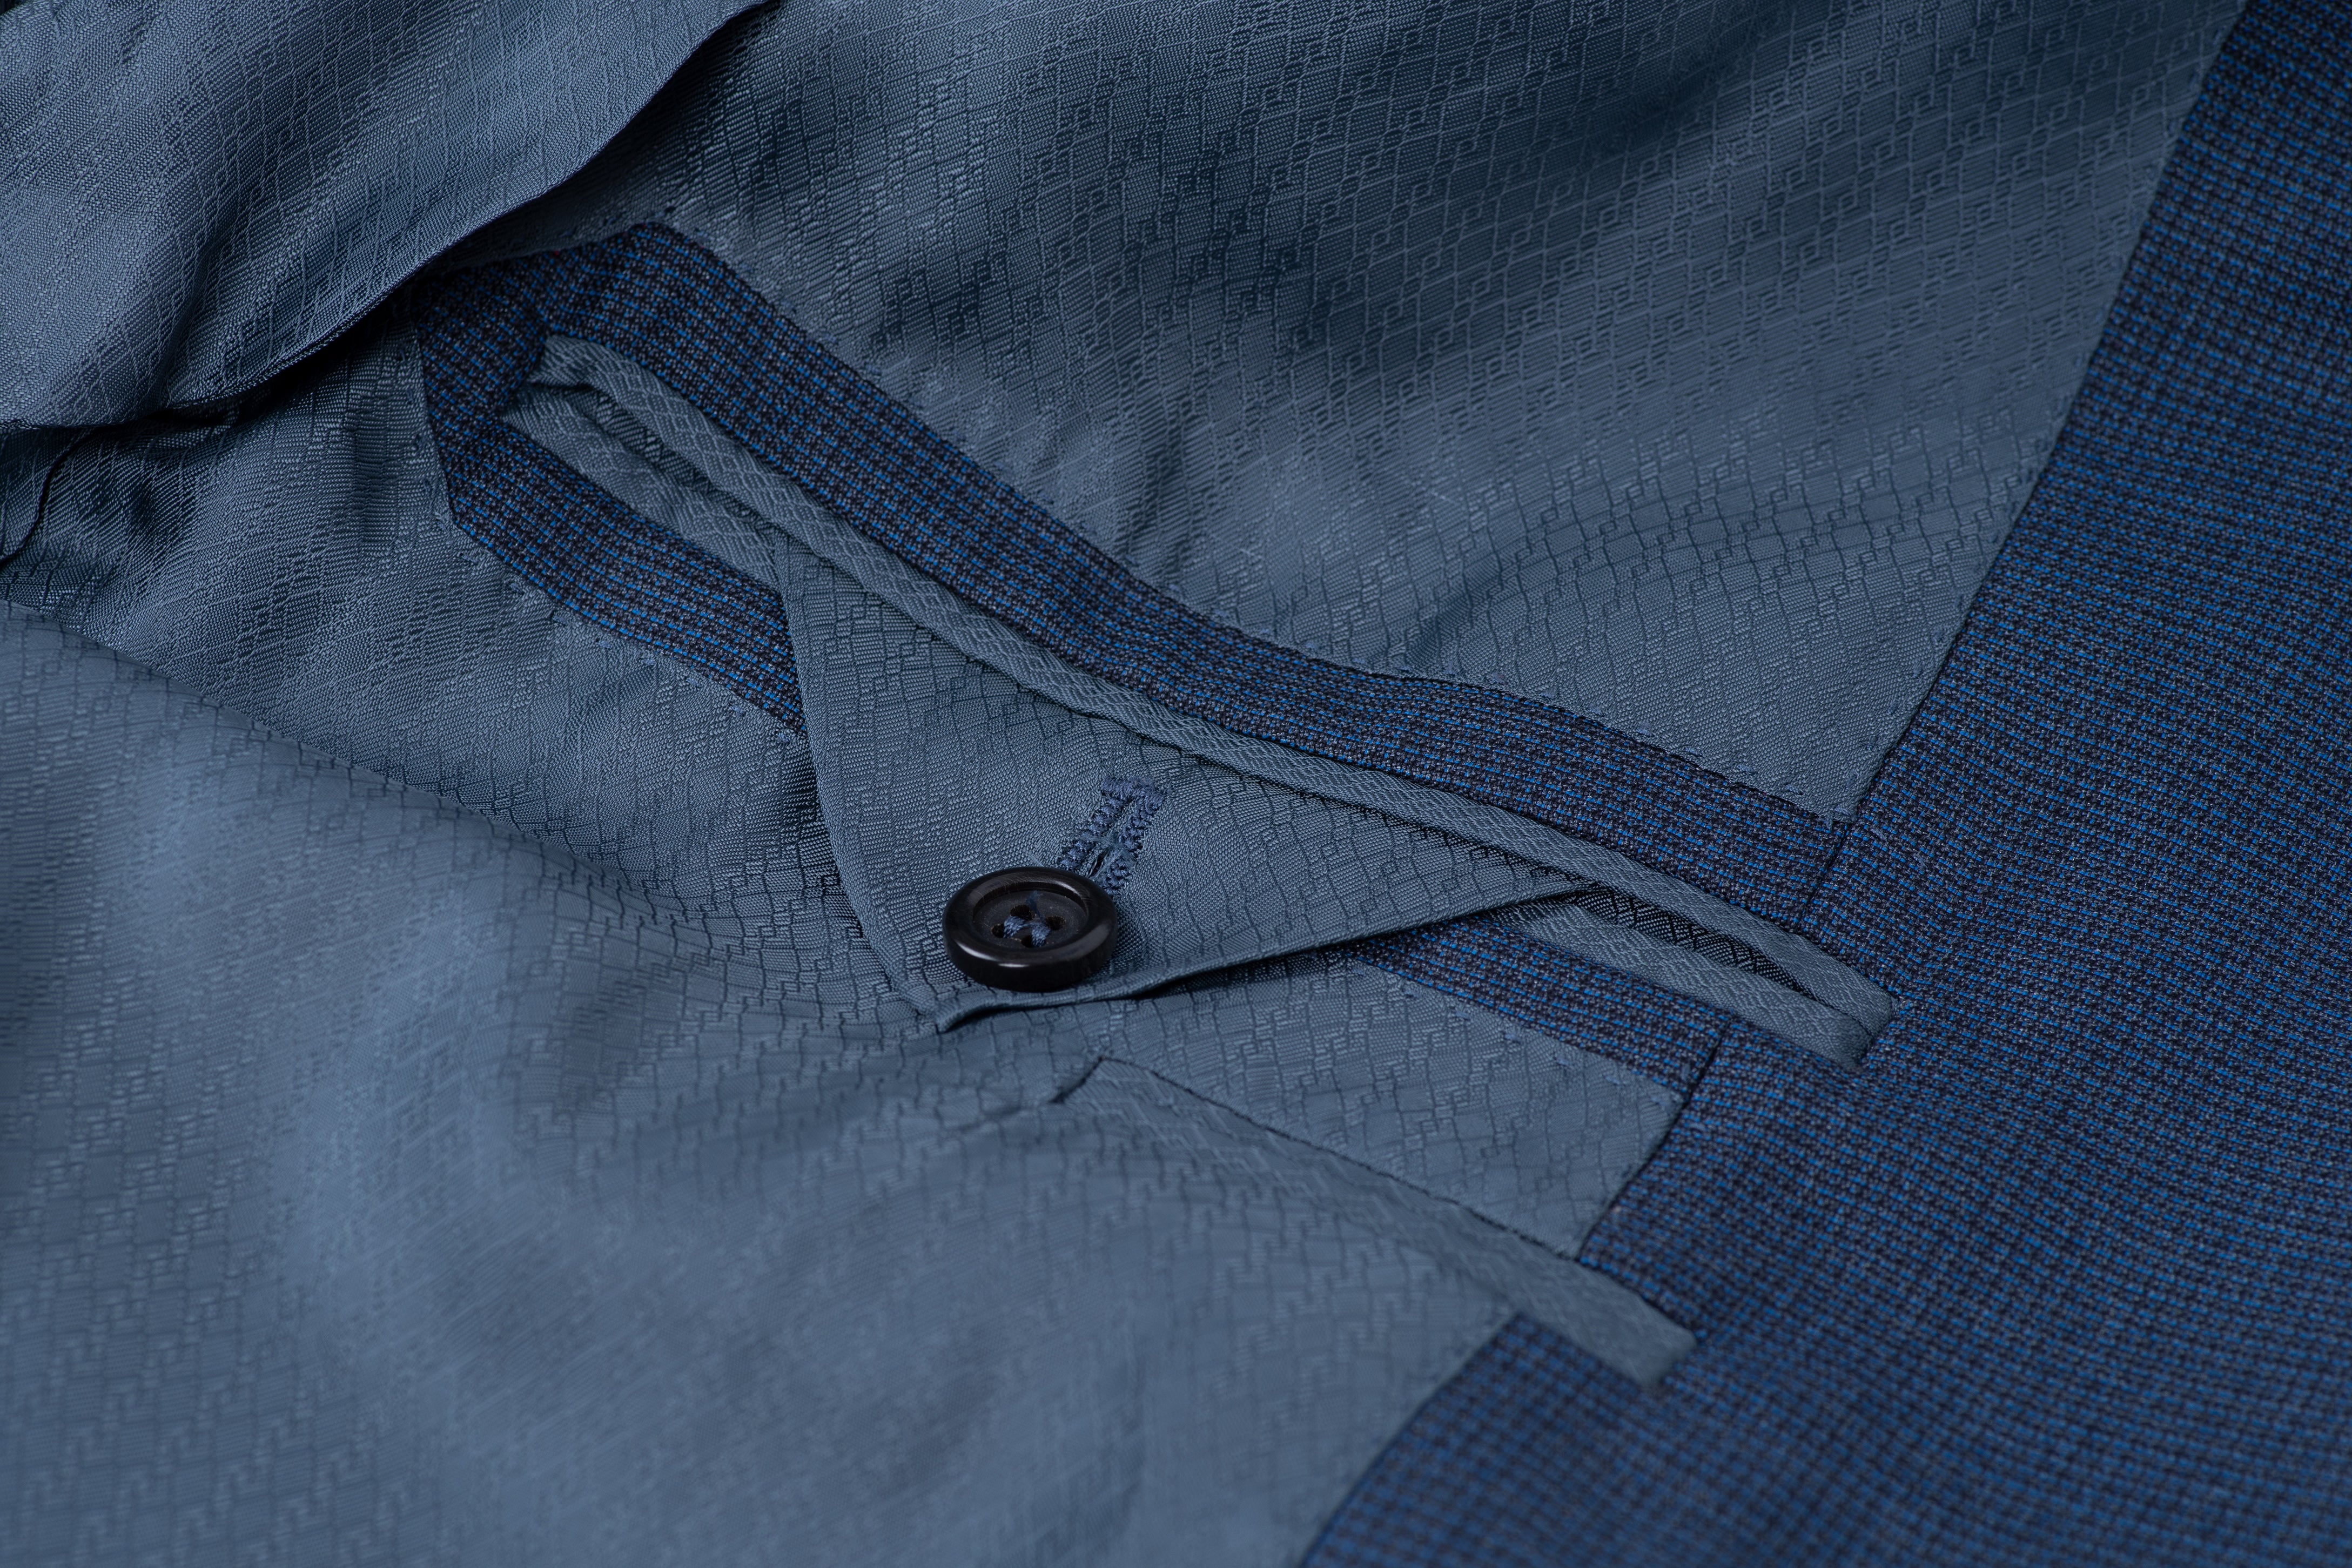 Canali Exclusive Silk & Wool Blue Blazer Jacket, SIZE US 42R, EU 52R